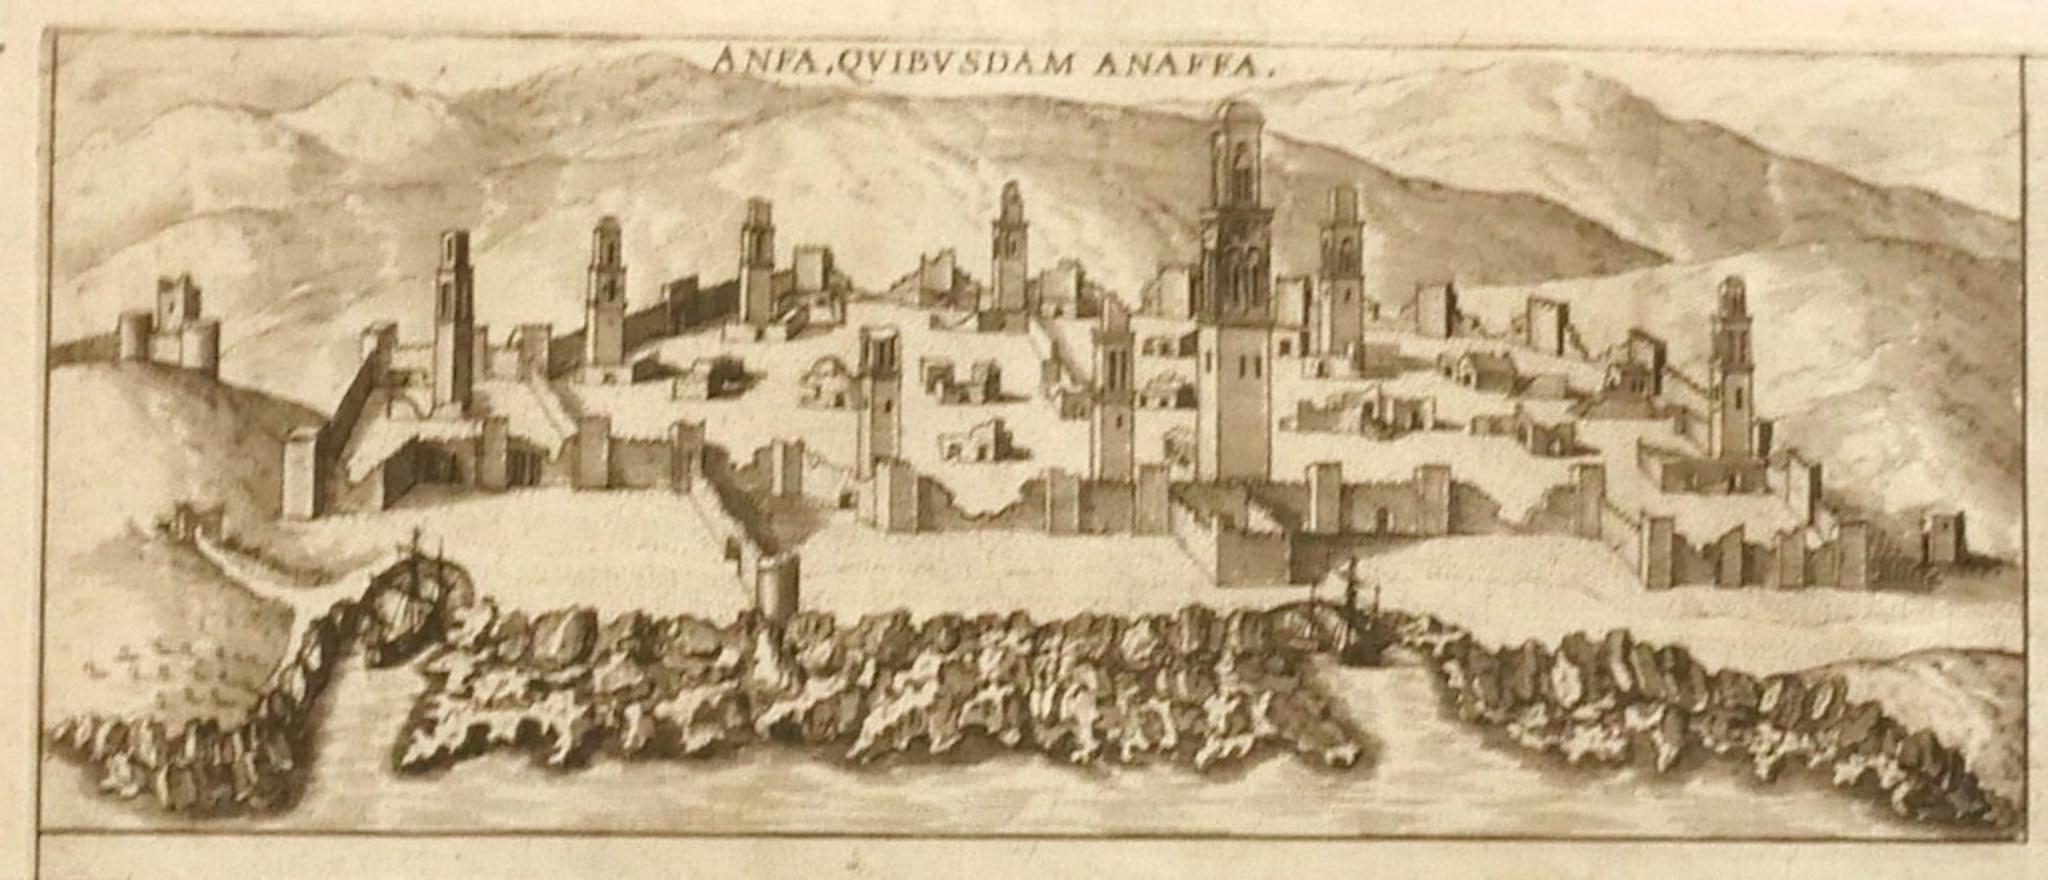 Frans Hogenberg Figurative Print - Map of Casablanca - Etching by G. Braun and F. Hogenberg - 16th Century